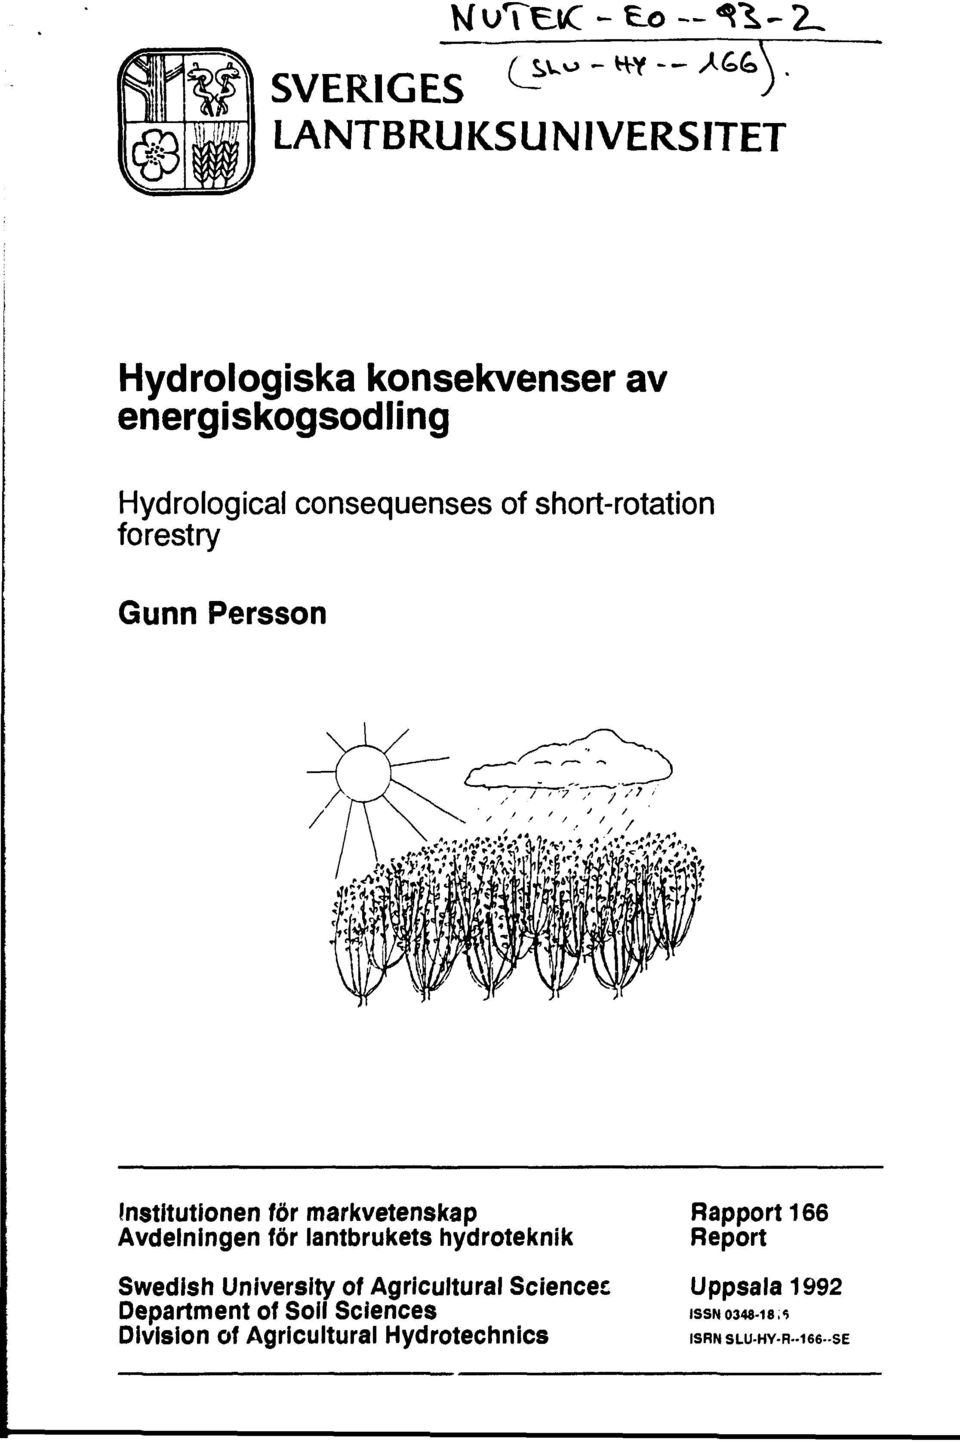 för lantbrukets hydroteknik Swedish University of Agricultural Sciences Department of Soil